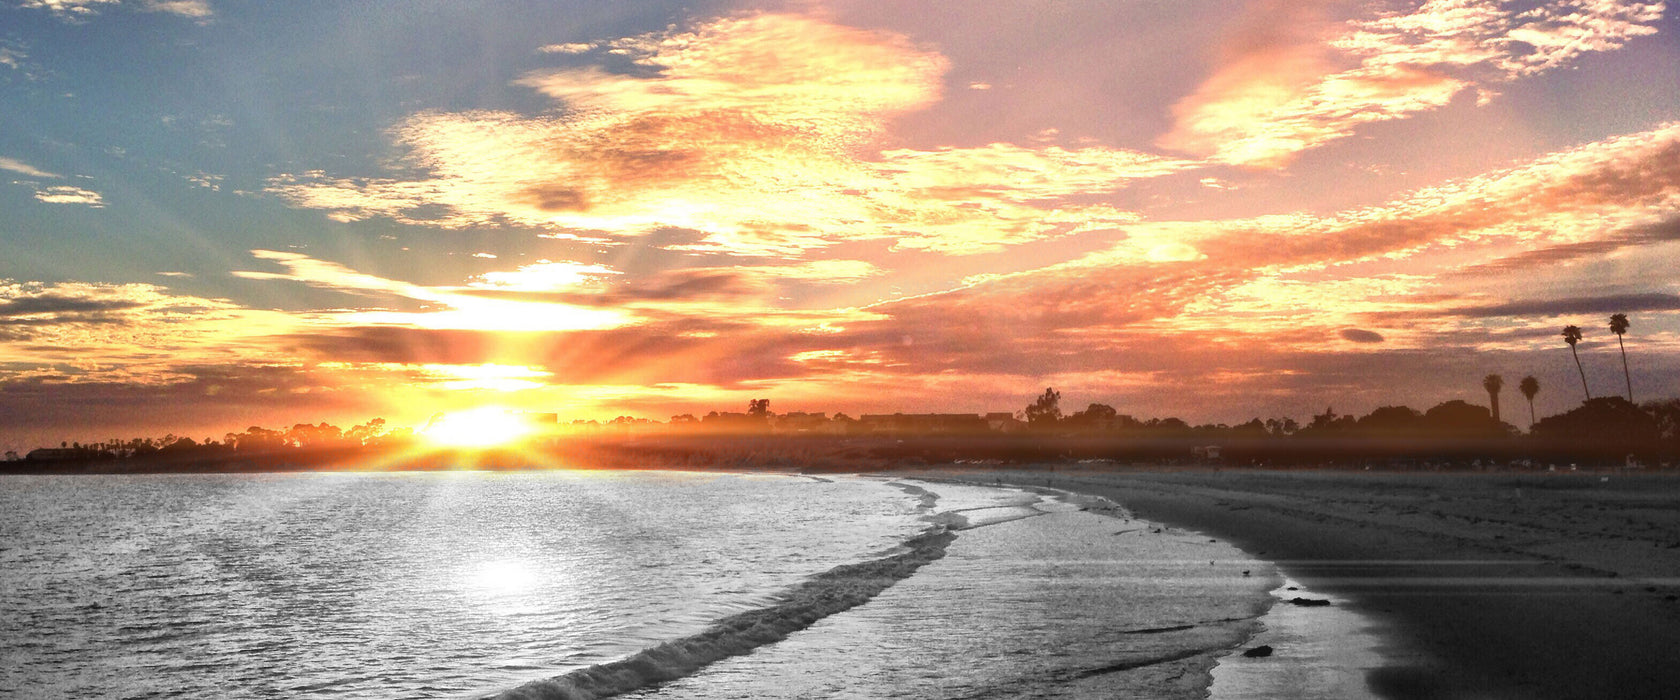 Strand bei Sonnenuntergang, Glasbild Panorama